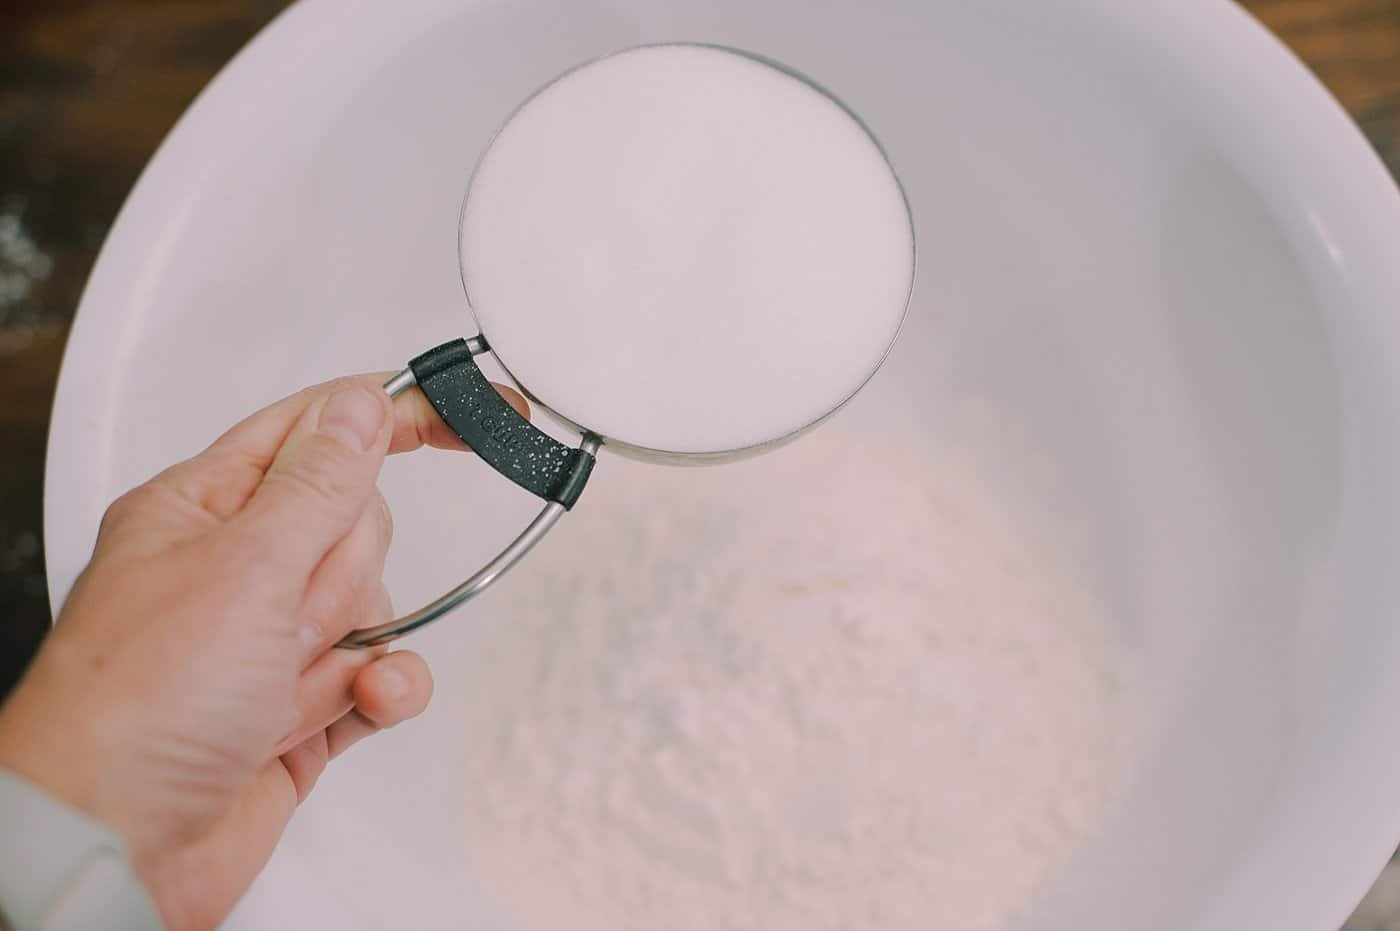 Easy DIY salt dough recipe ingredients - what do you need to make salt dough - how to make salt dough.